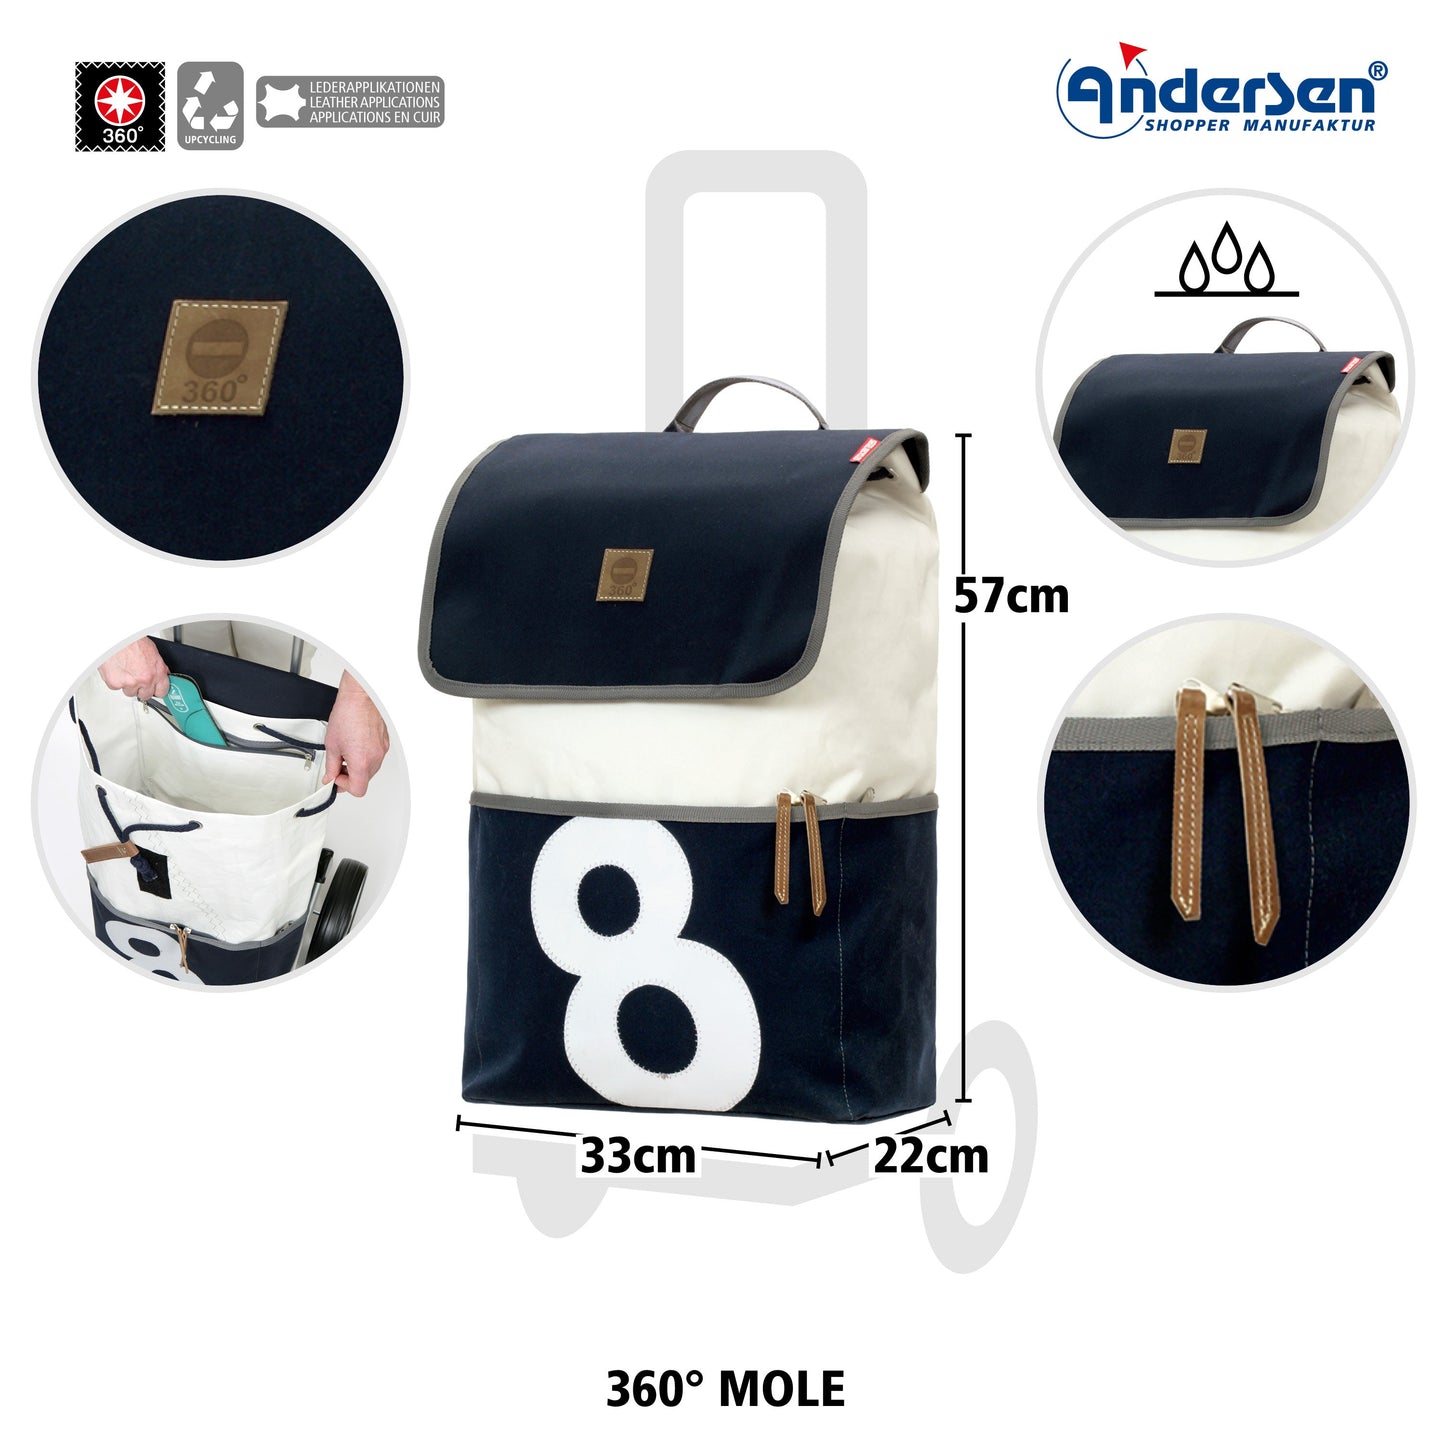 Andersen Shopper Manufaktur-360° Mole 8-www.shopping-trolley.ch-bild2